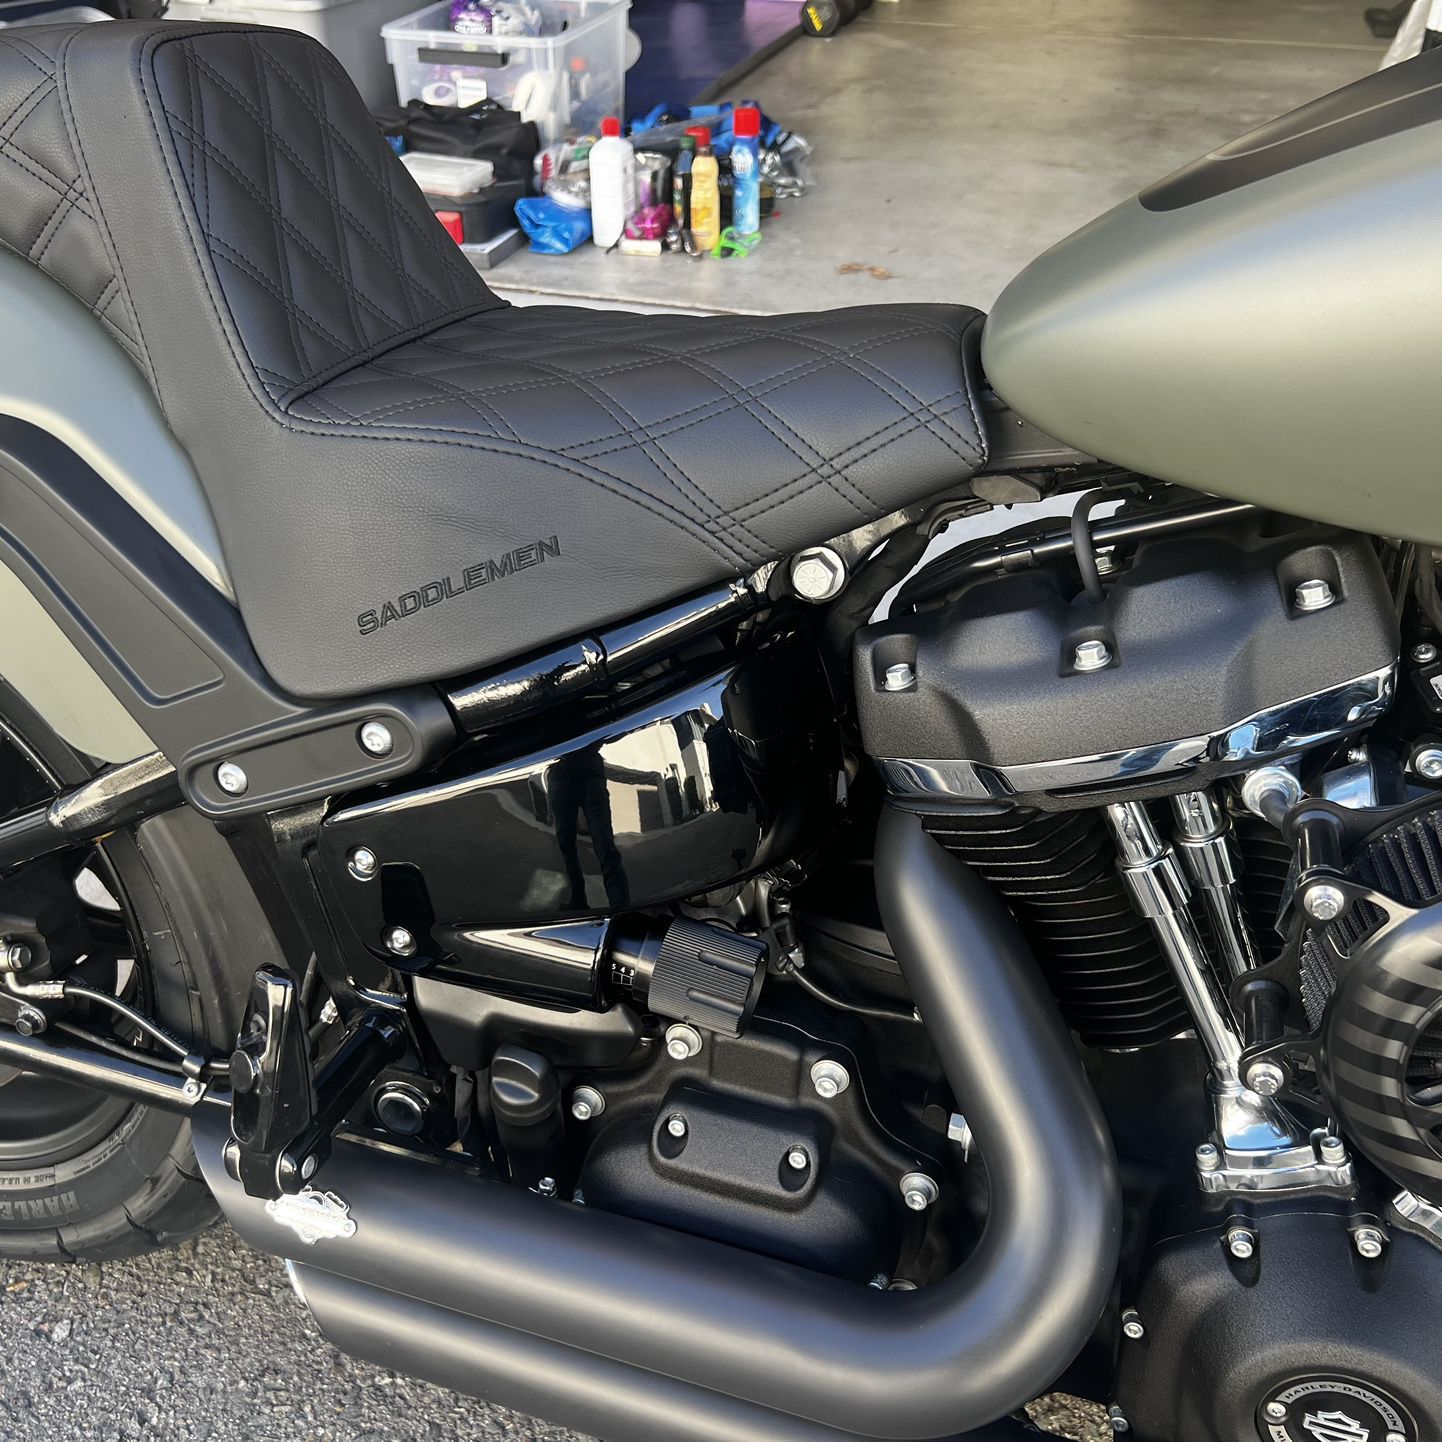 2021 Harley Davidson Fat Bob 114 Special Edition